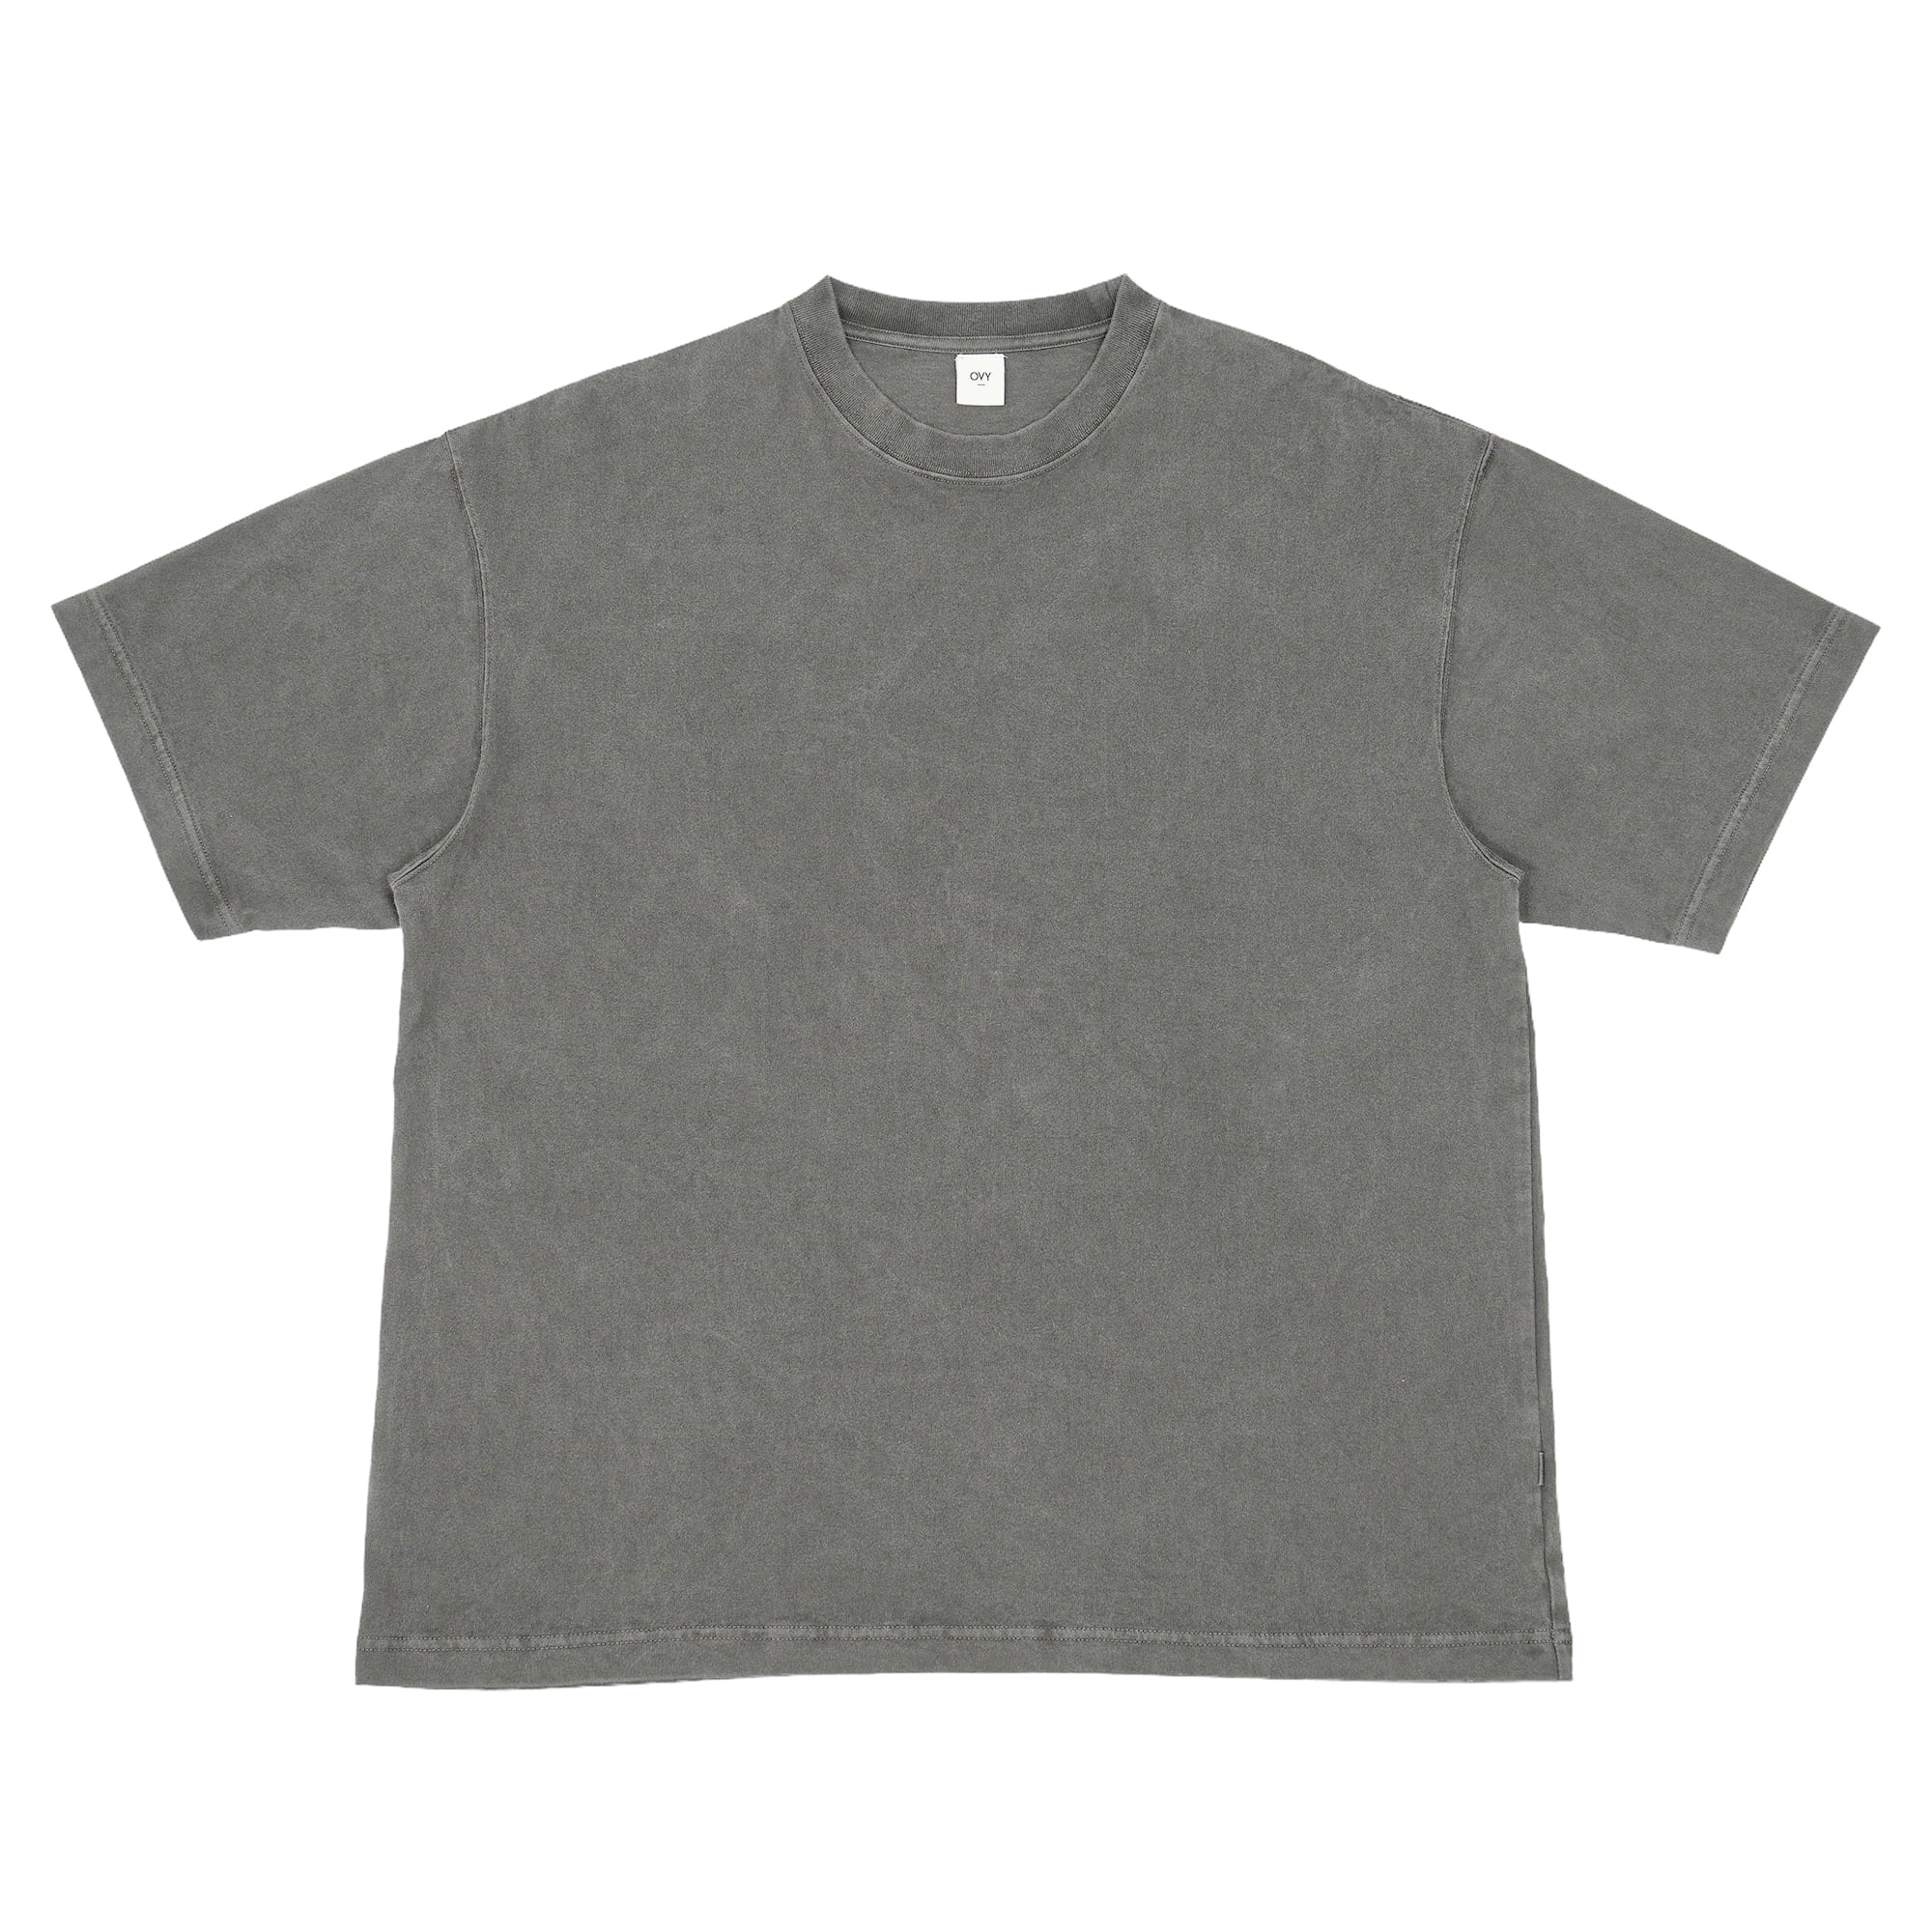 Fine Cotton Basic 3pac T-shirts (white&black) | OVY